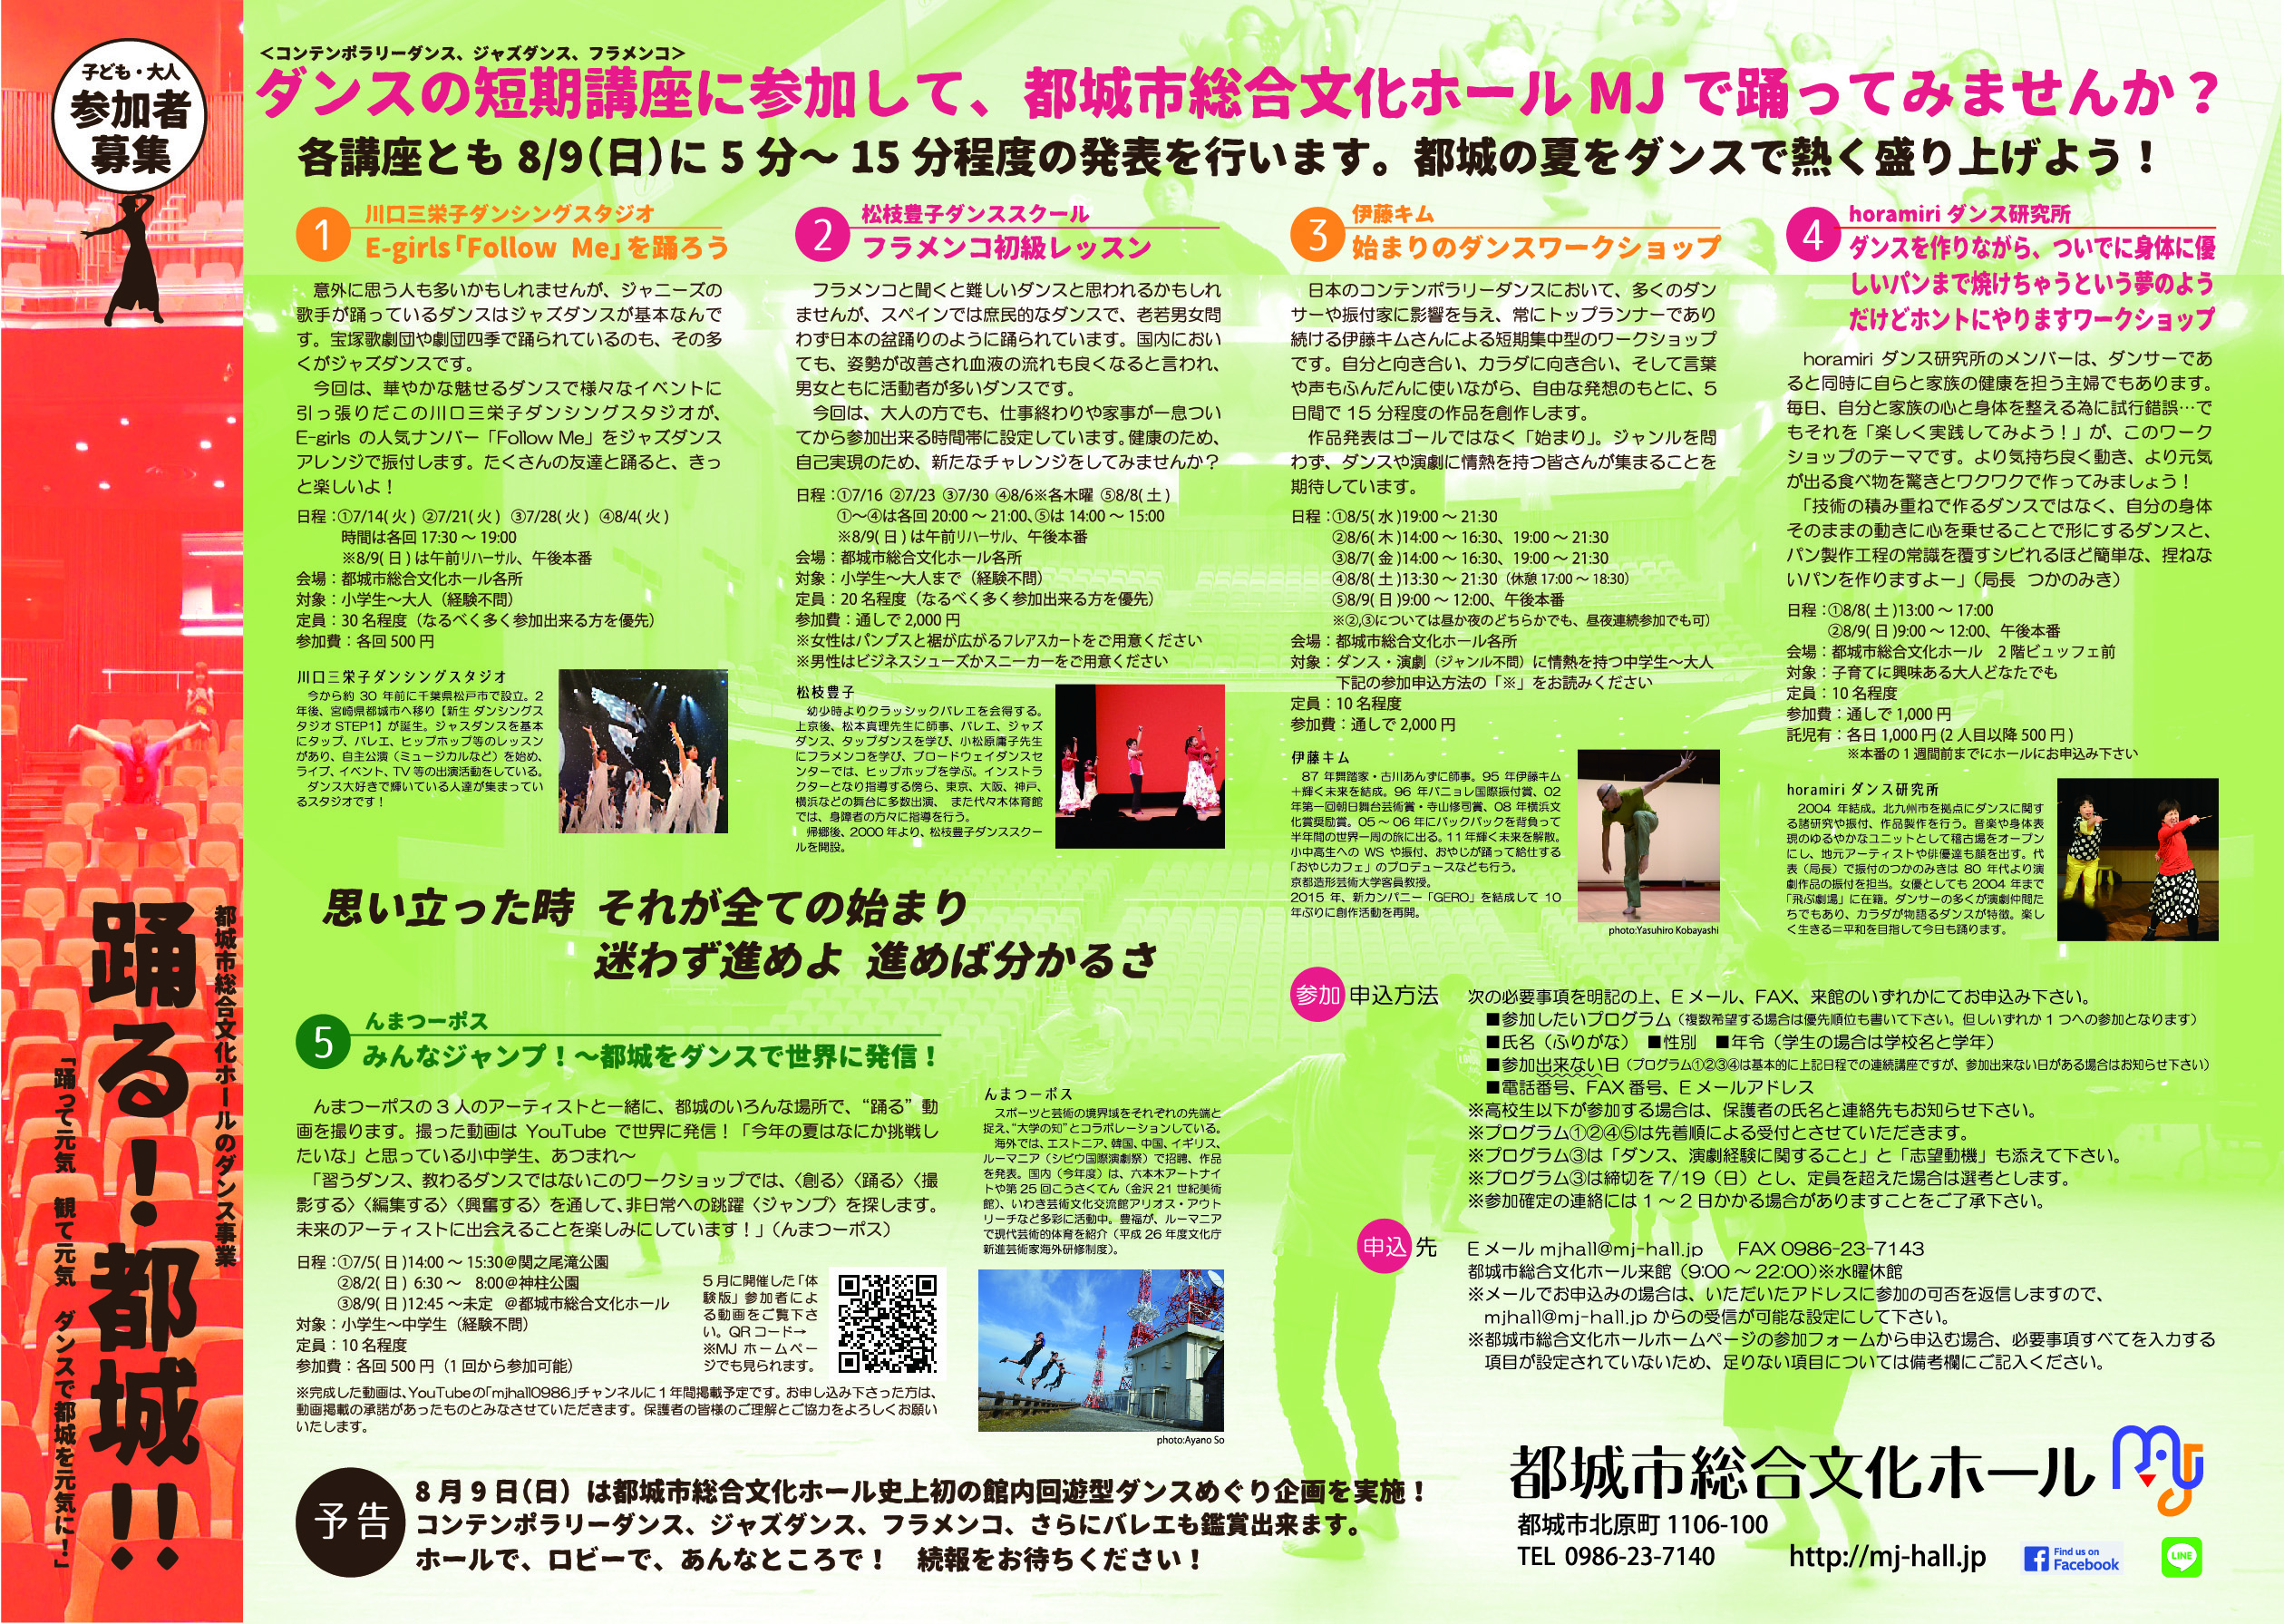 http://mj-hall.jp/performance/270809_leaflet.jpg